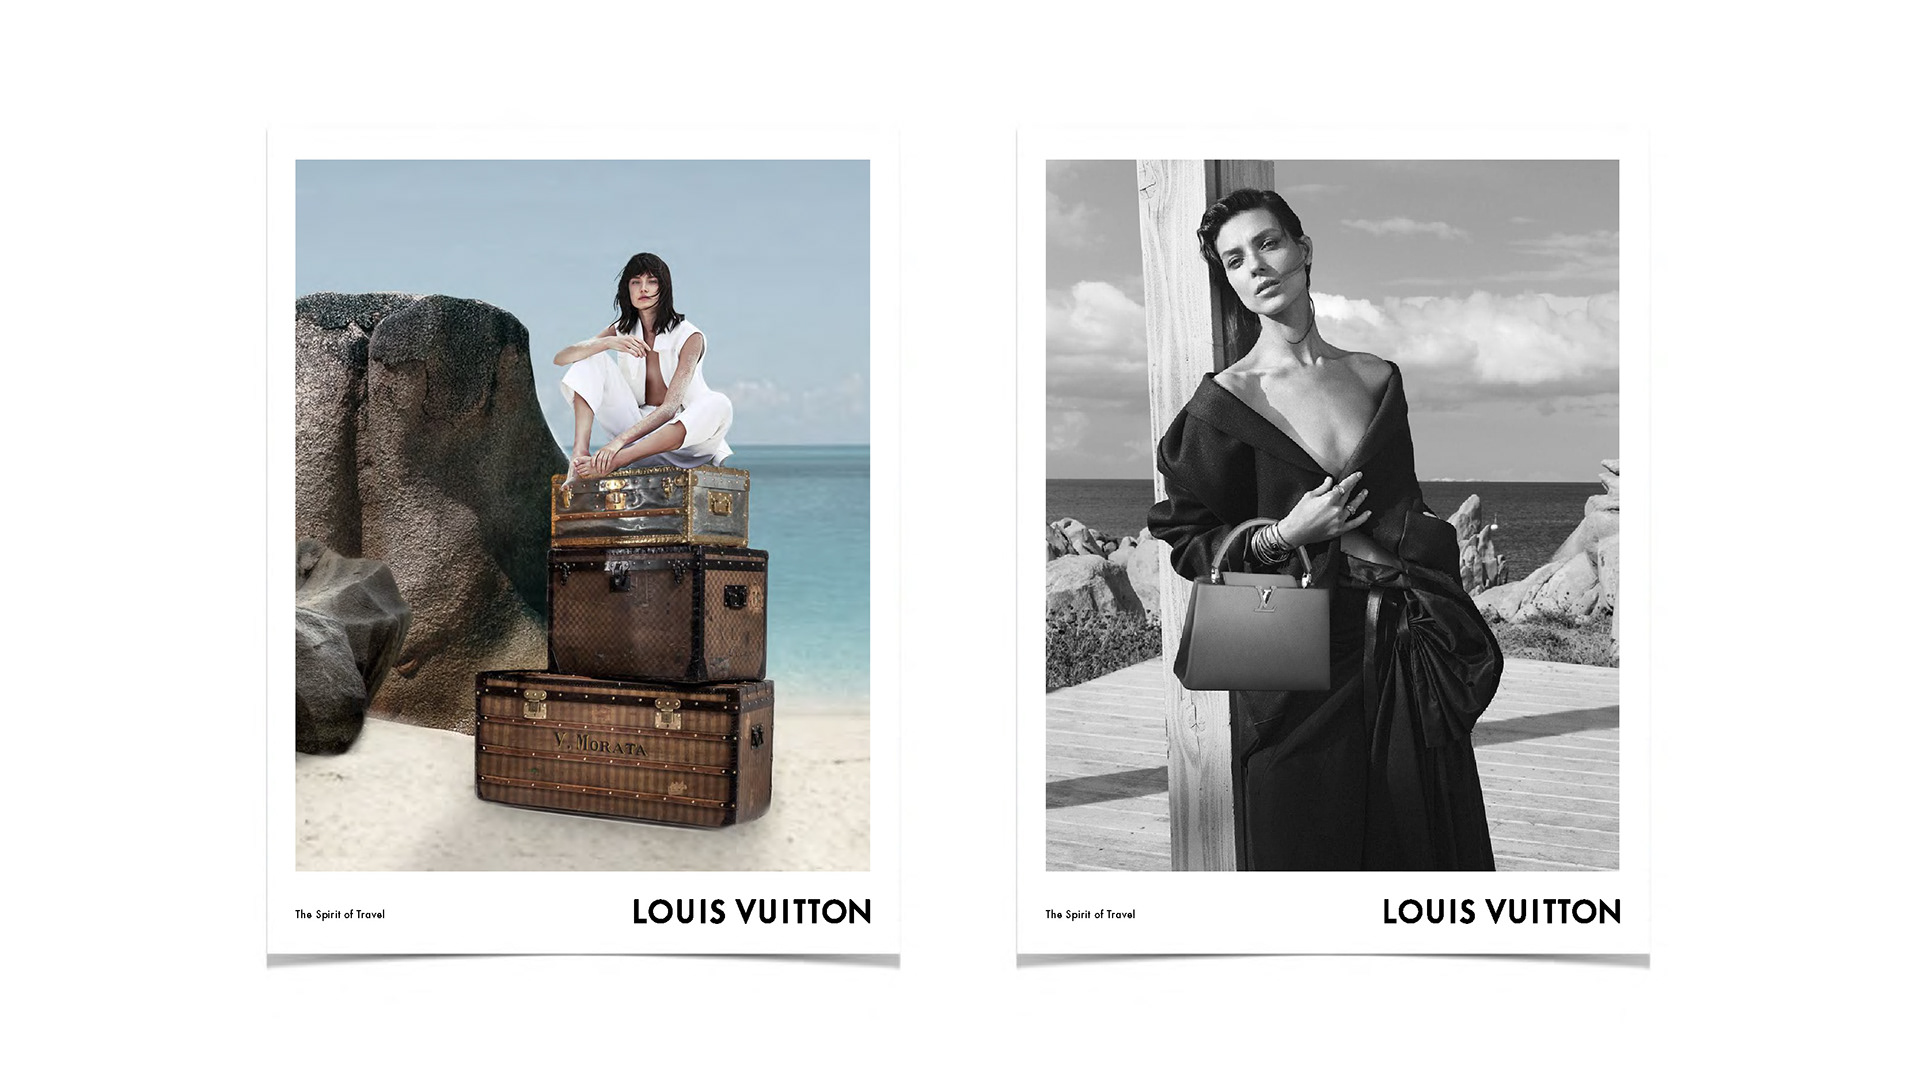 Louis Vuitton Cruise 2019 Campaign